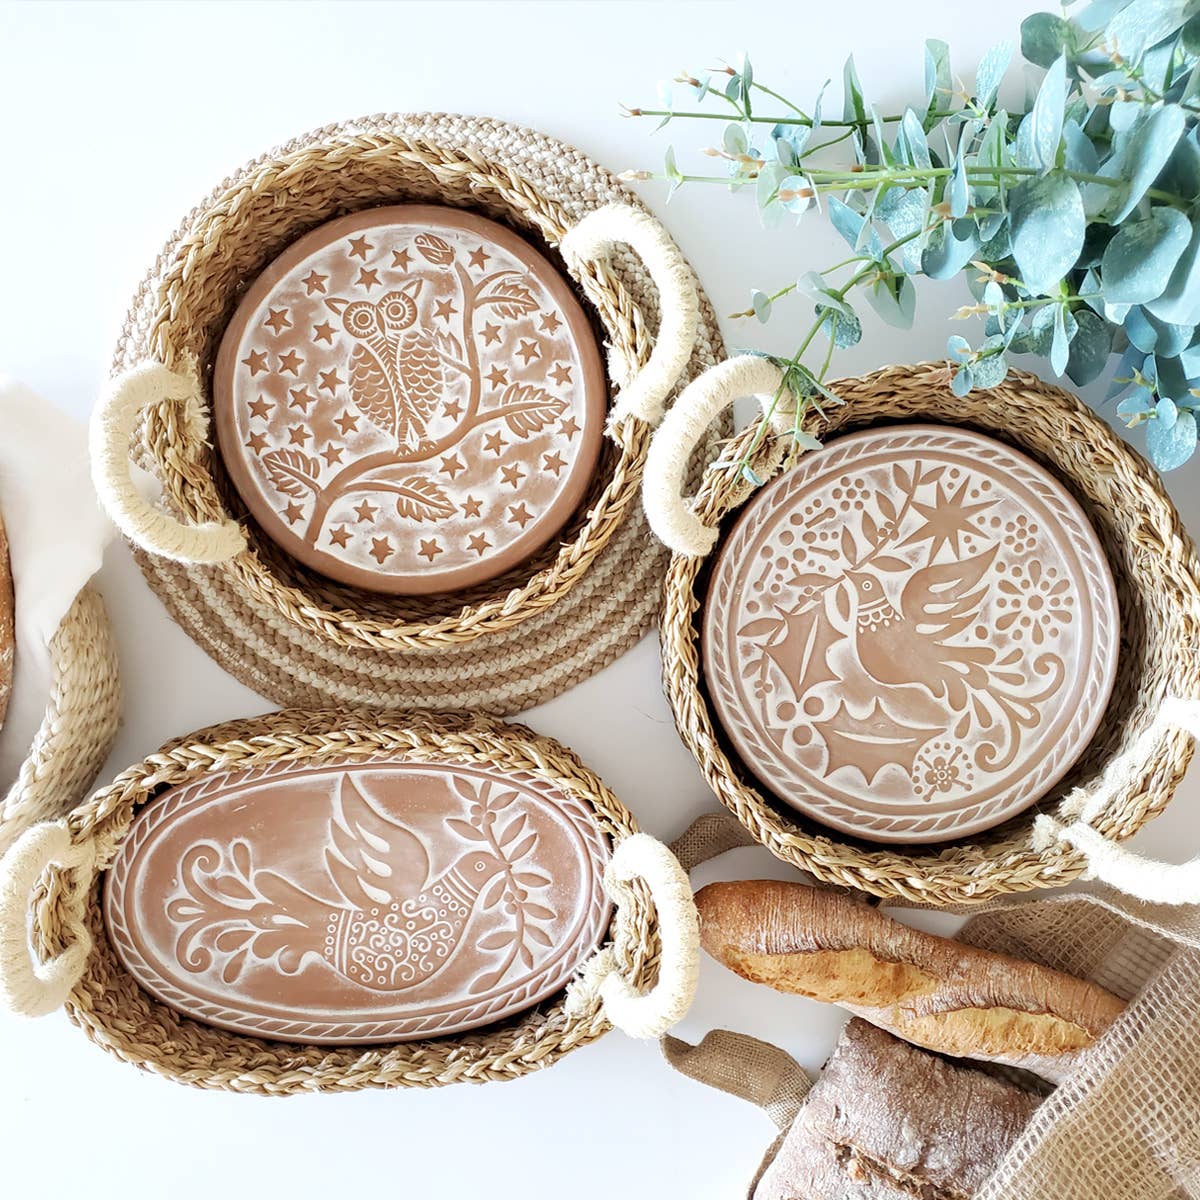 Handmade Bread Warmer & Wicker Basket | Fair Trade Warming Set in Bird Motif Round